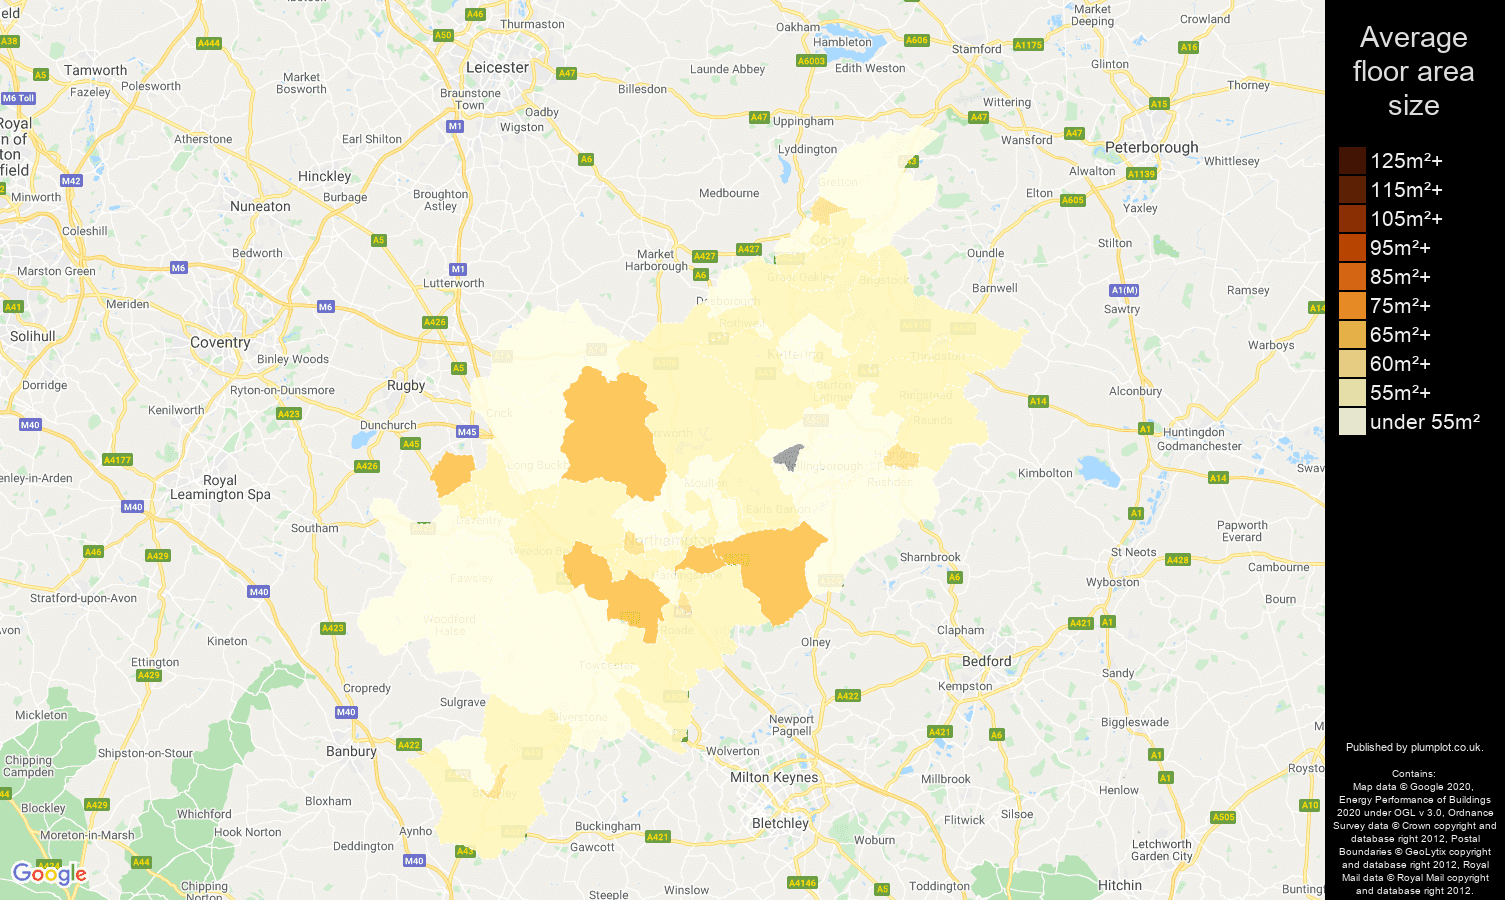 Northampton map of average floor area size of flats